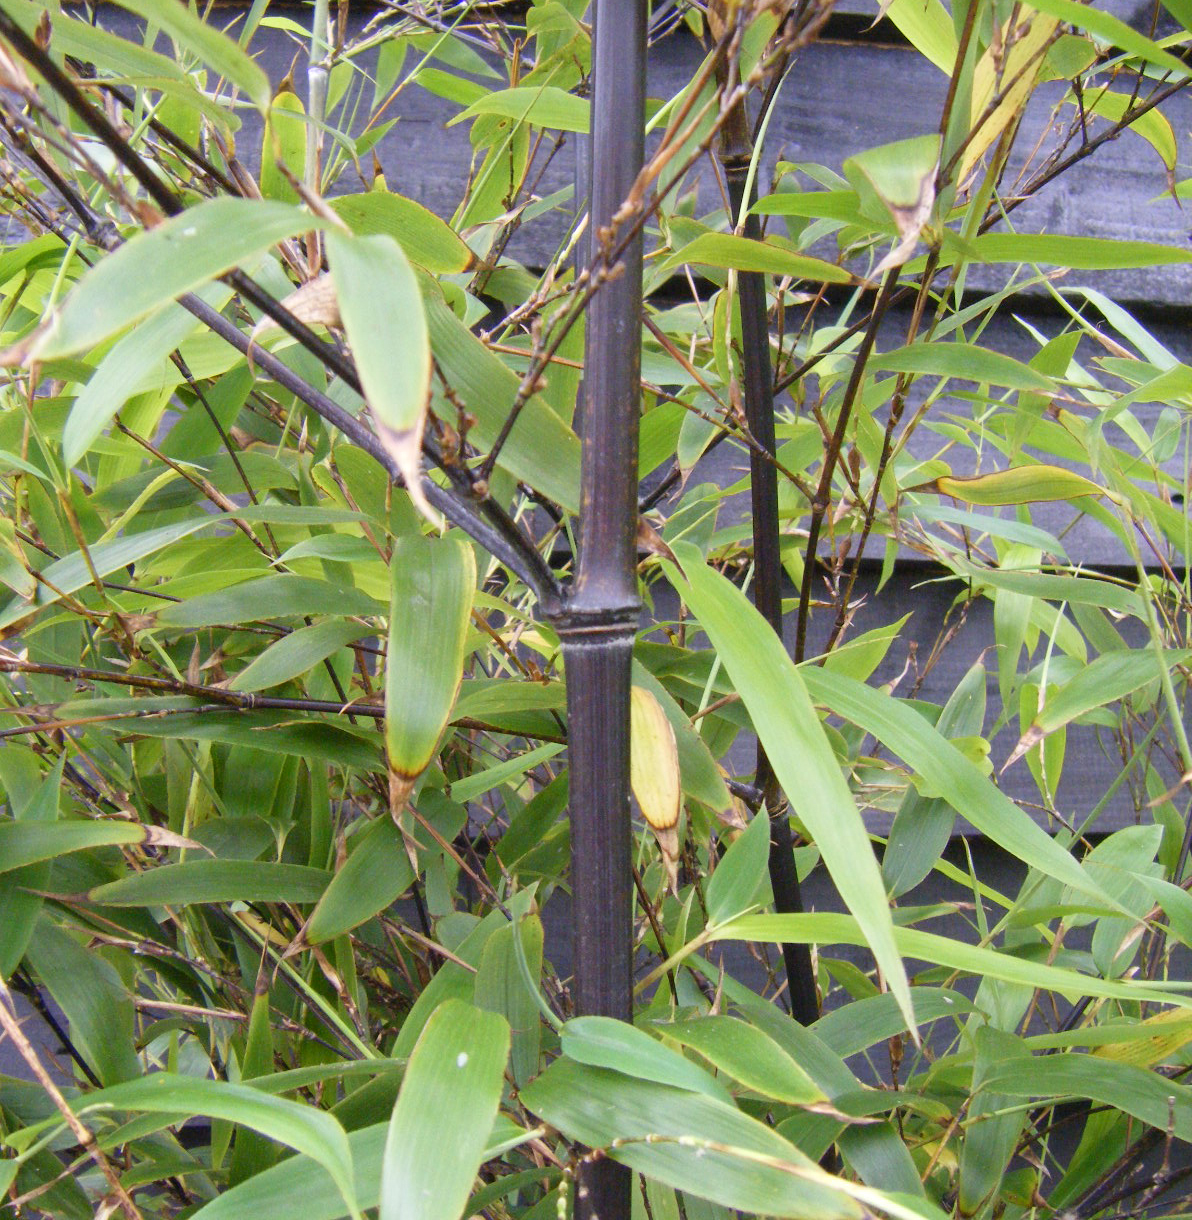 Phyllostachys nigra – Black bamboo 1.25-1.5m tall